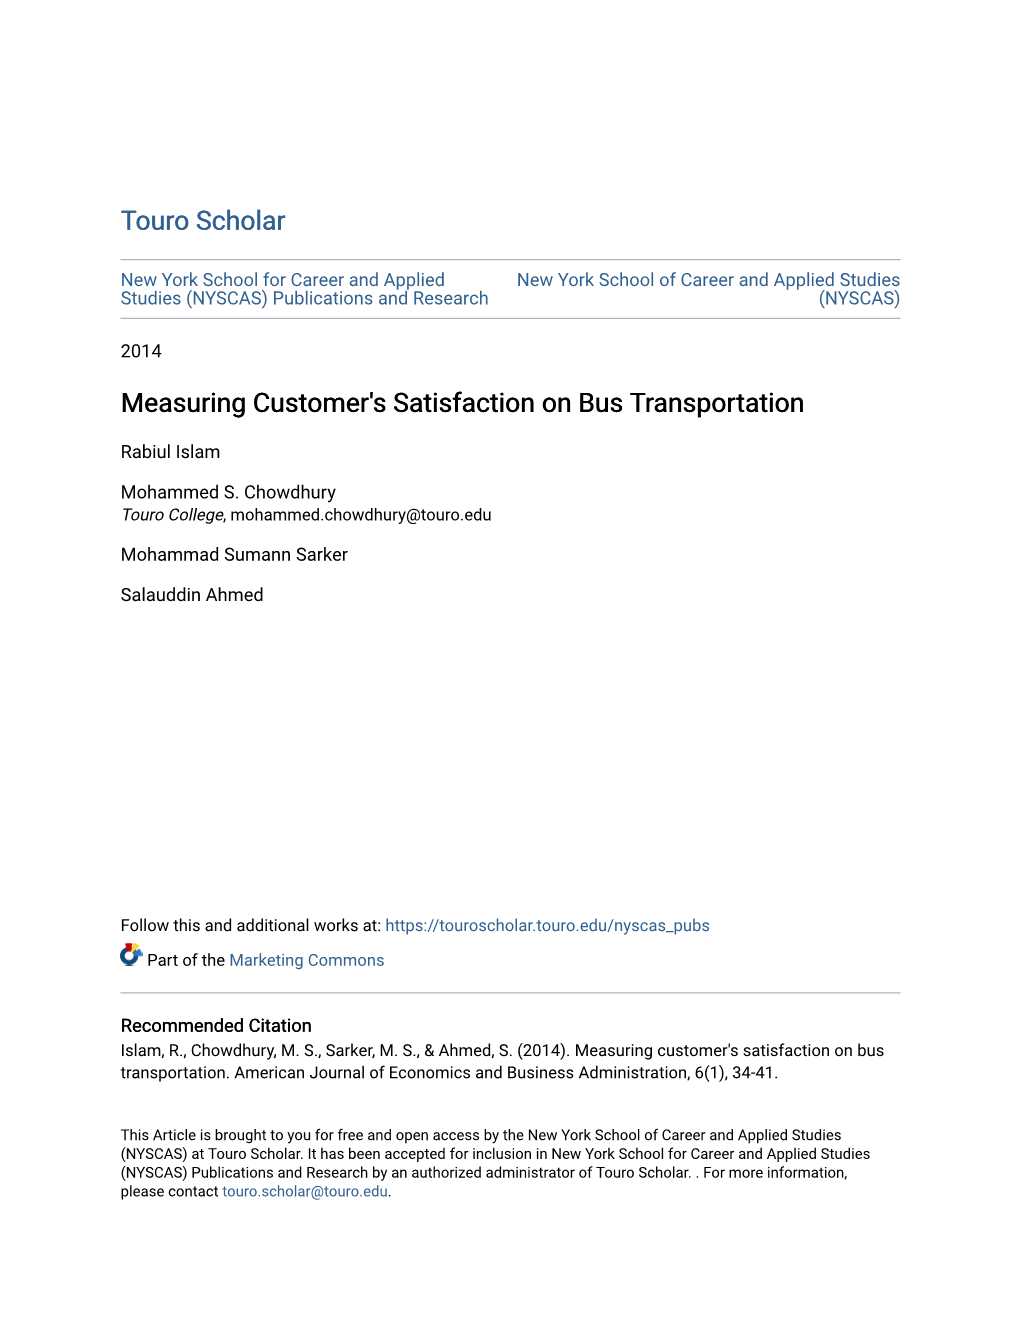 Measuring Customer's Satisfaction on Bus Transportation